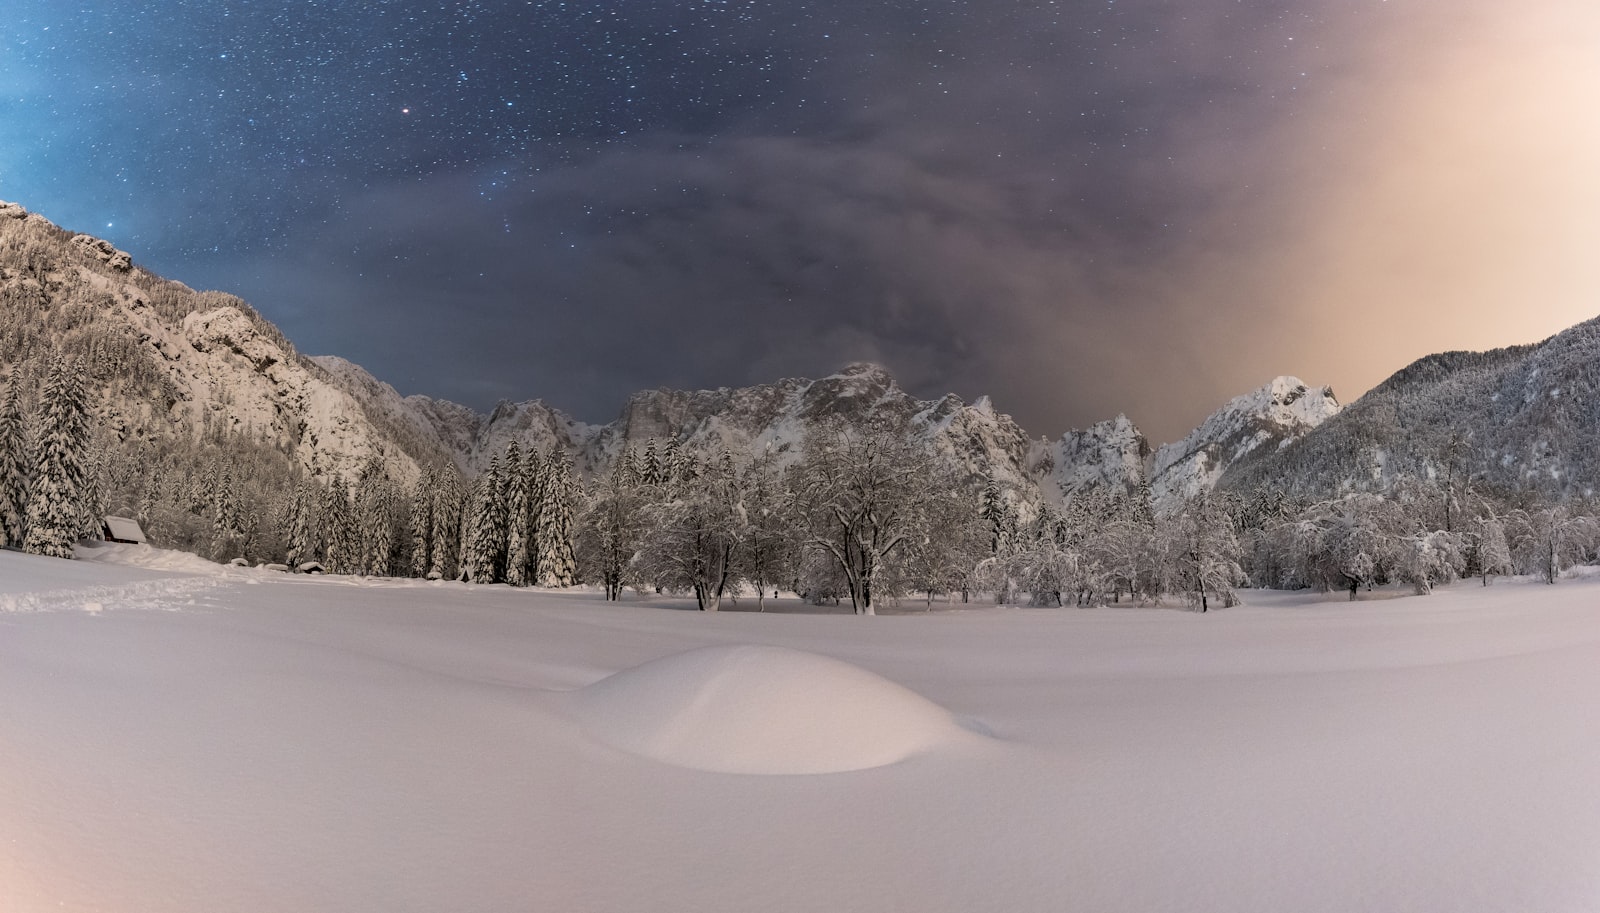 Nikon D810A sample photo. "Snowcapped mountain at daytime" photography